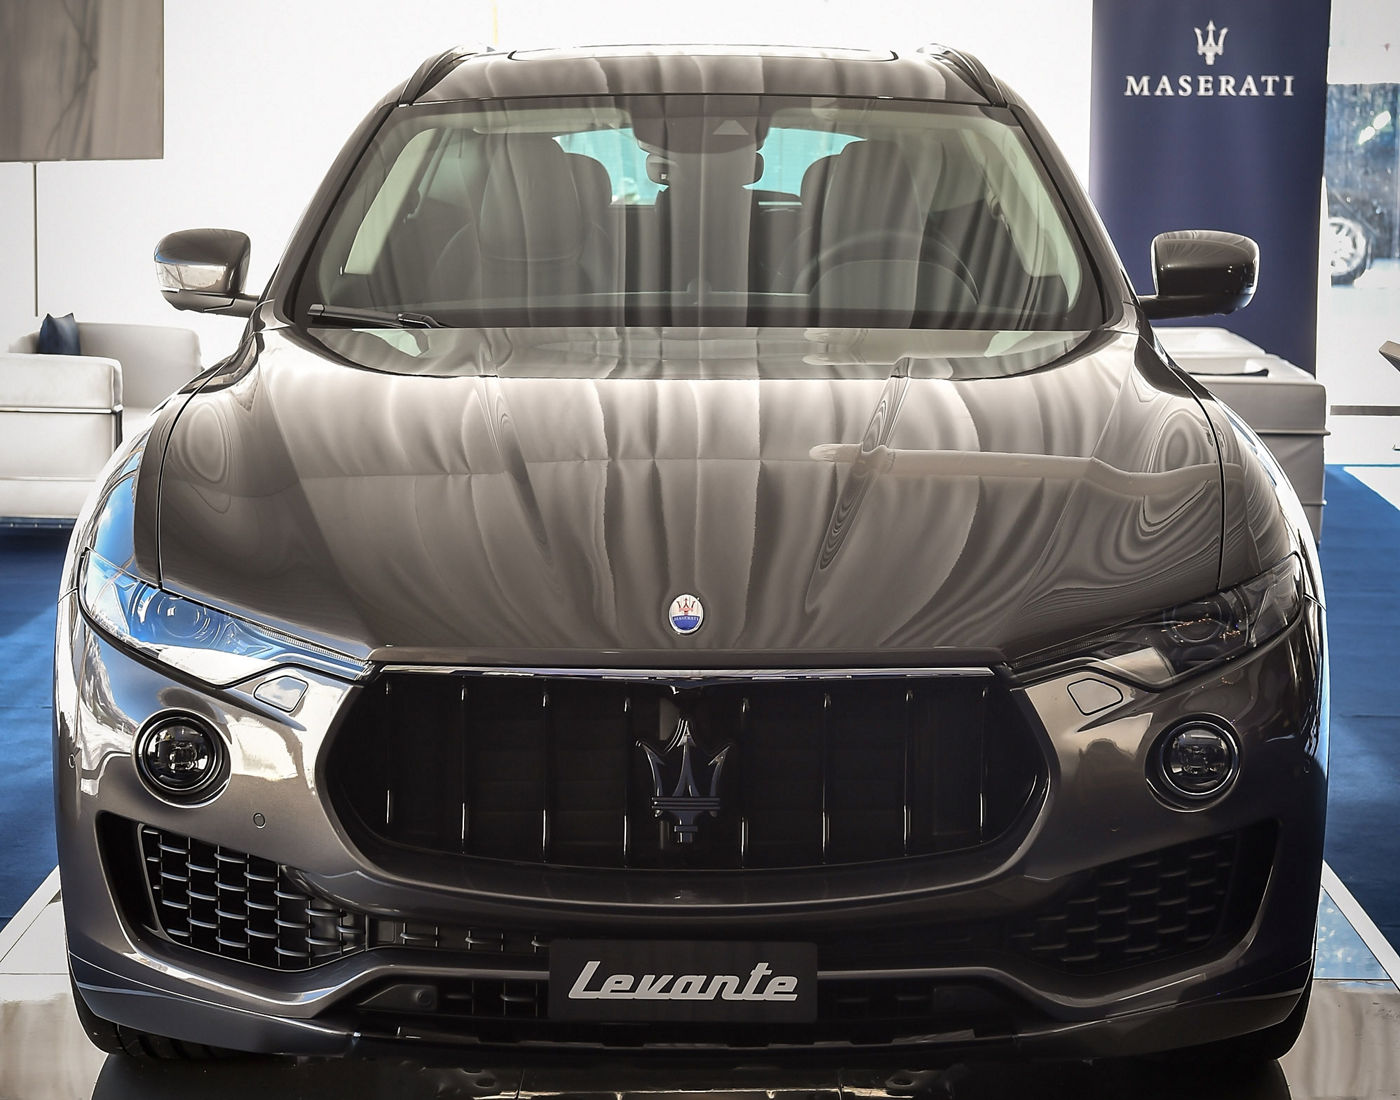 Maserati-Levante-on-display-at-the-Maserati-Lounge